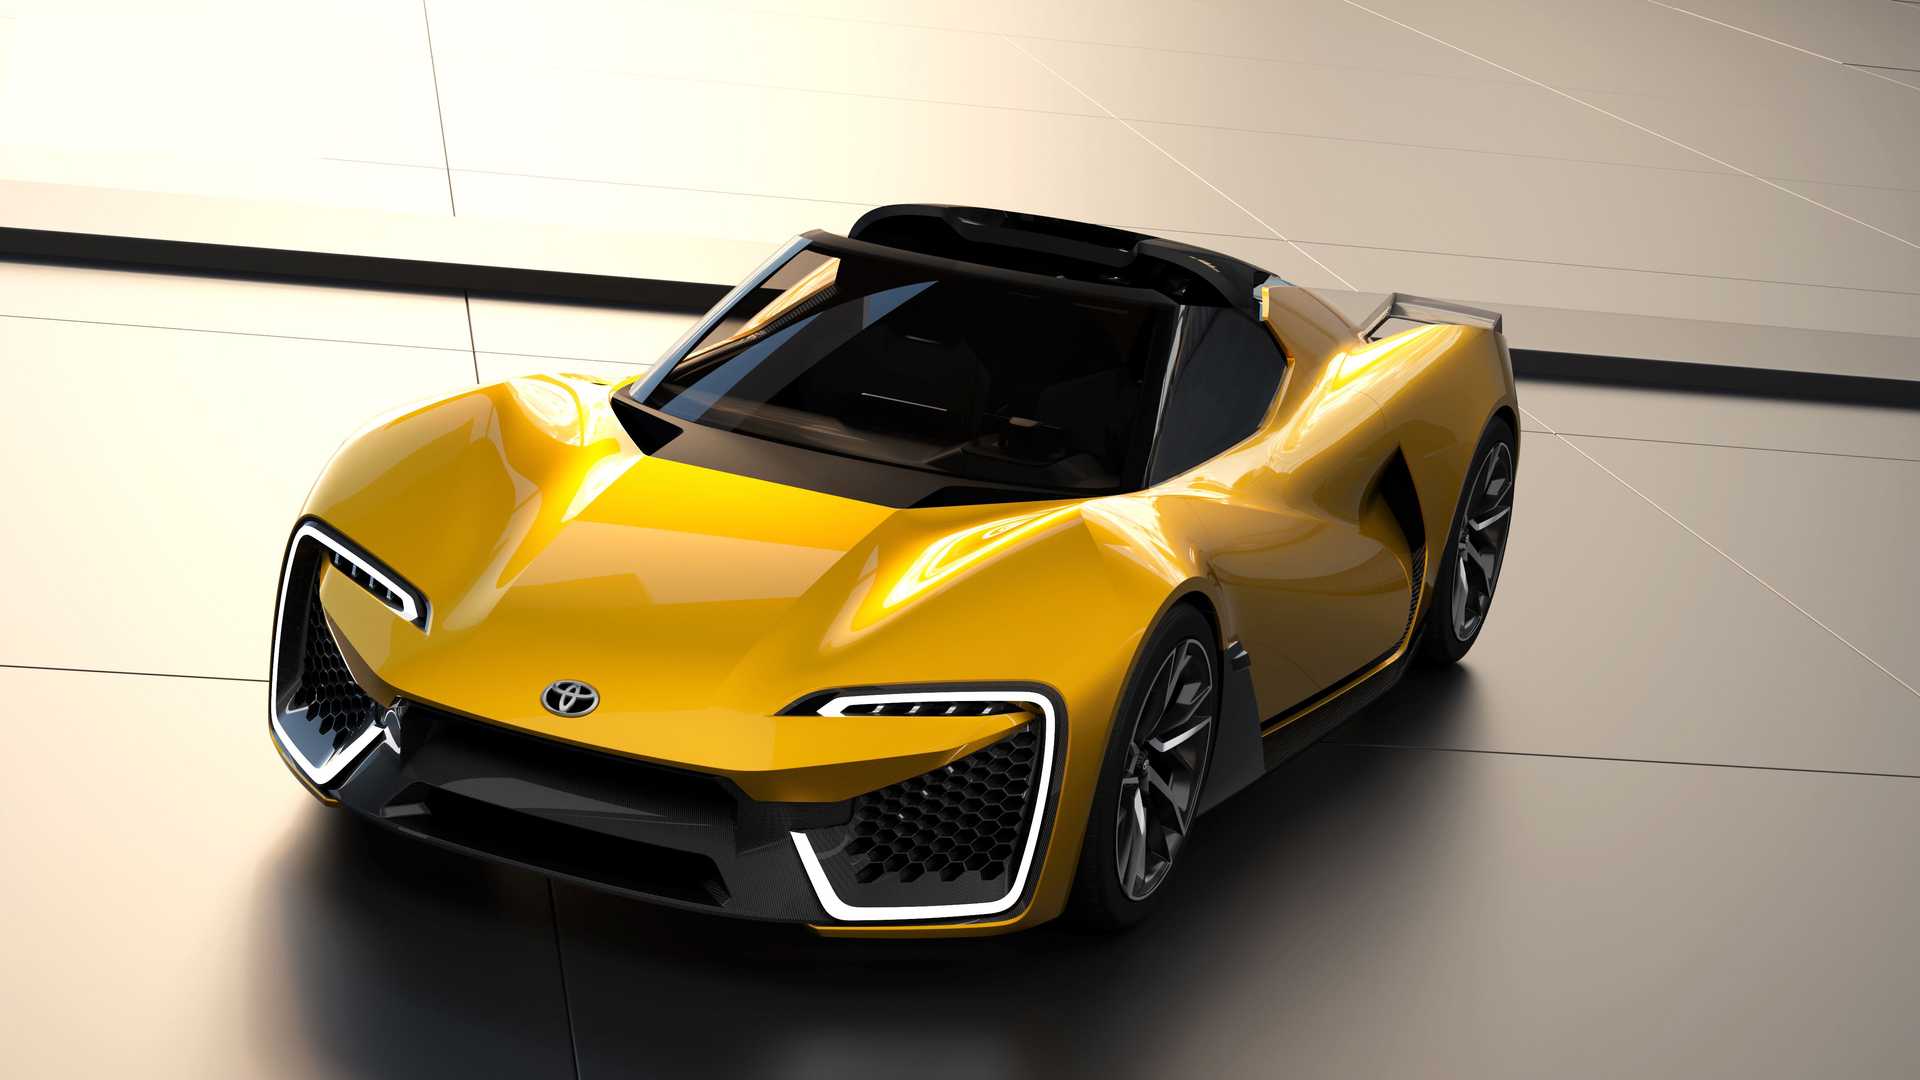 Sebuah mobil sport elektrik berlogo GR sedang dikembangkan oleh Toyota. 